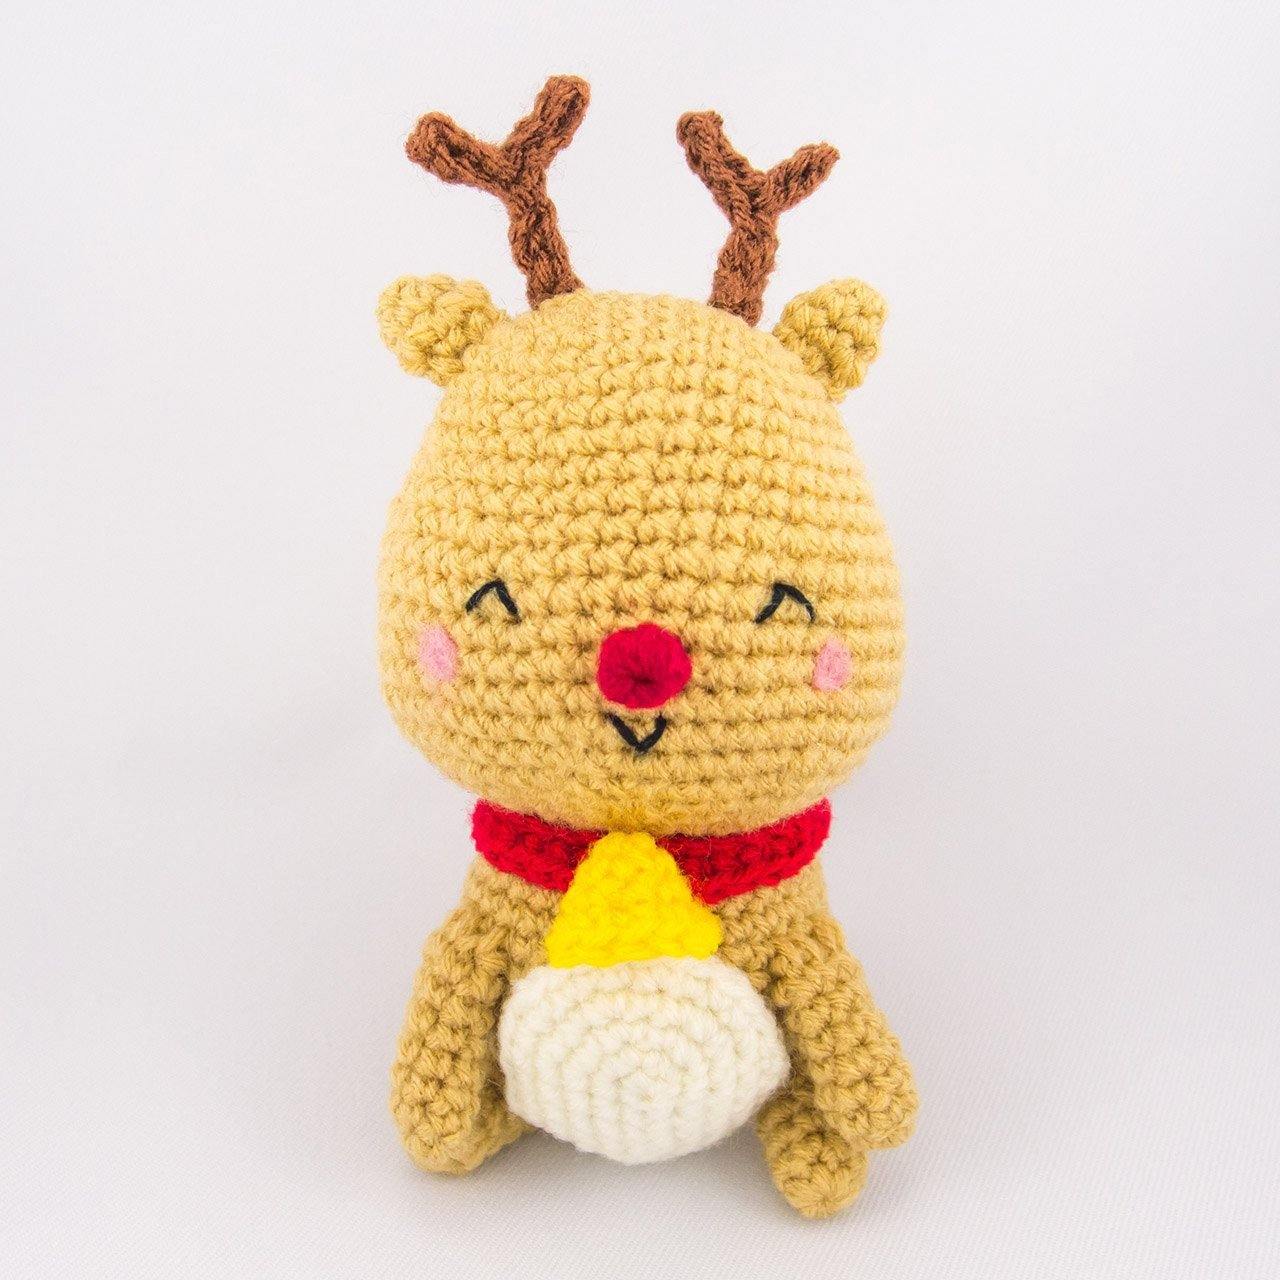 Jingle the Reindeer Crochet Toy for Christmas